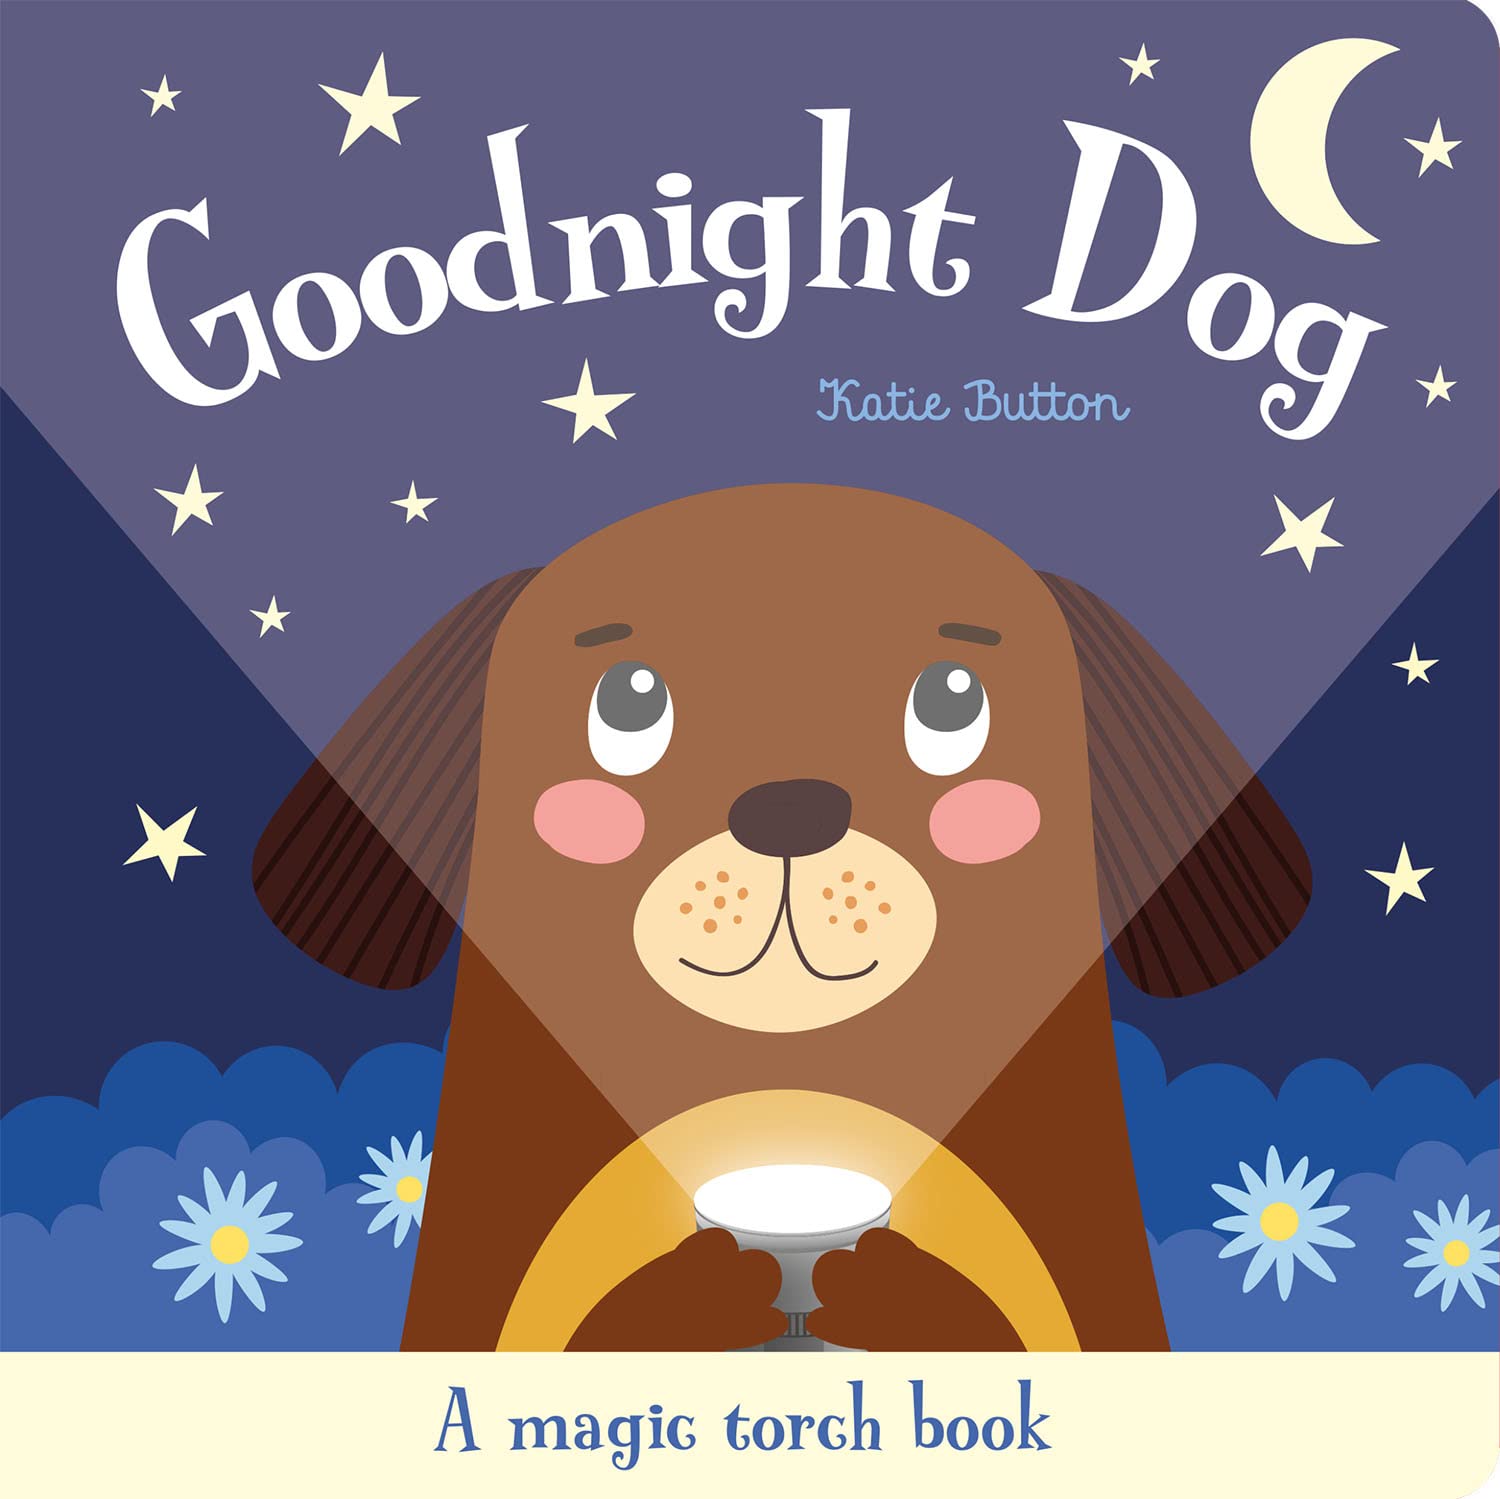 Magic Torch Books: Good Night Dog